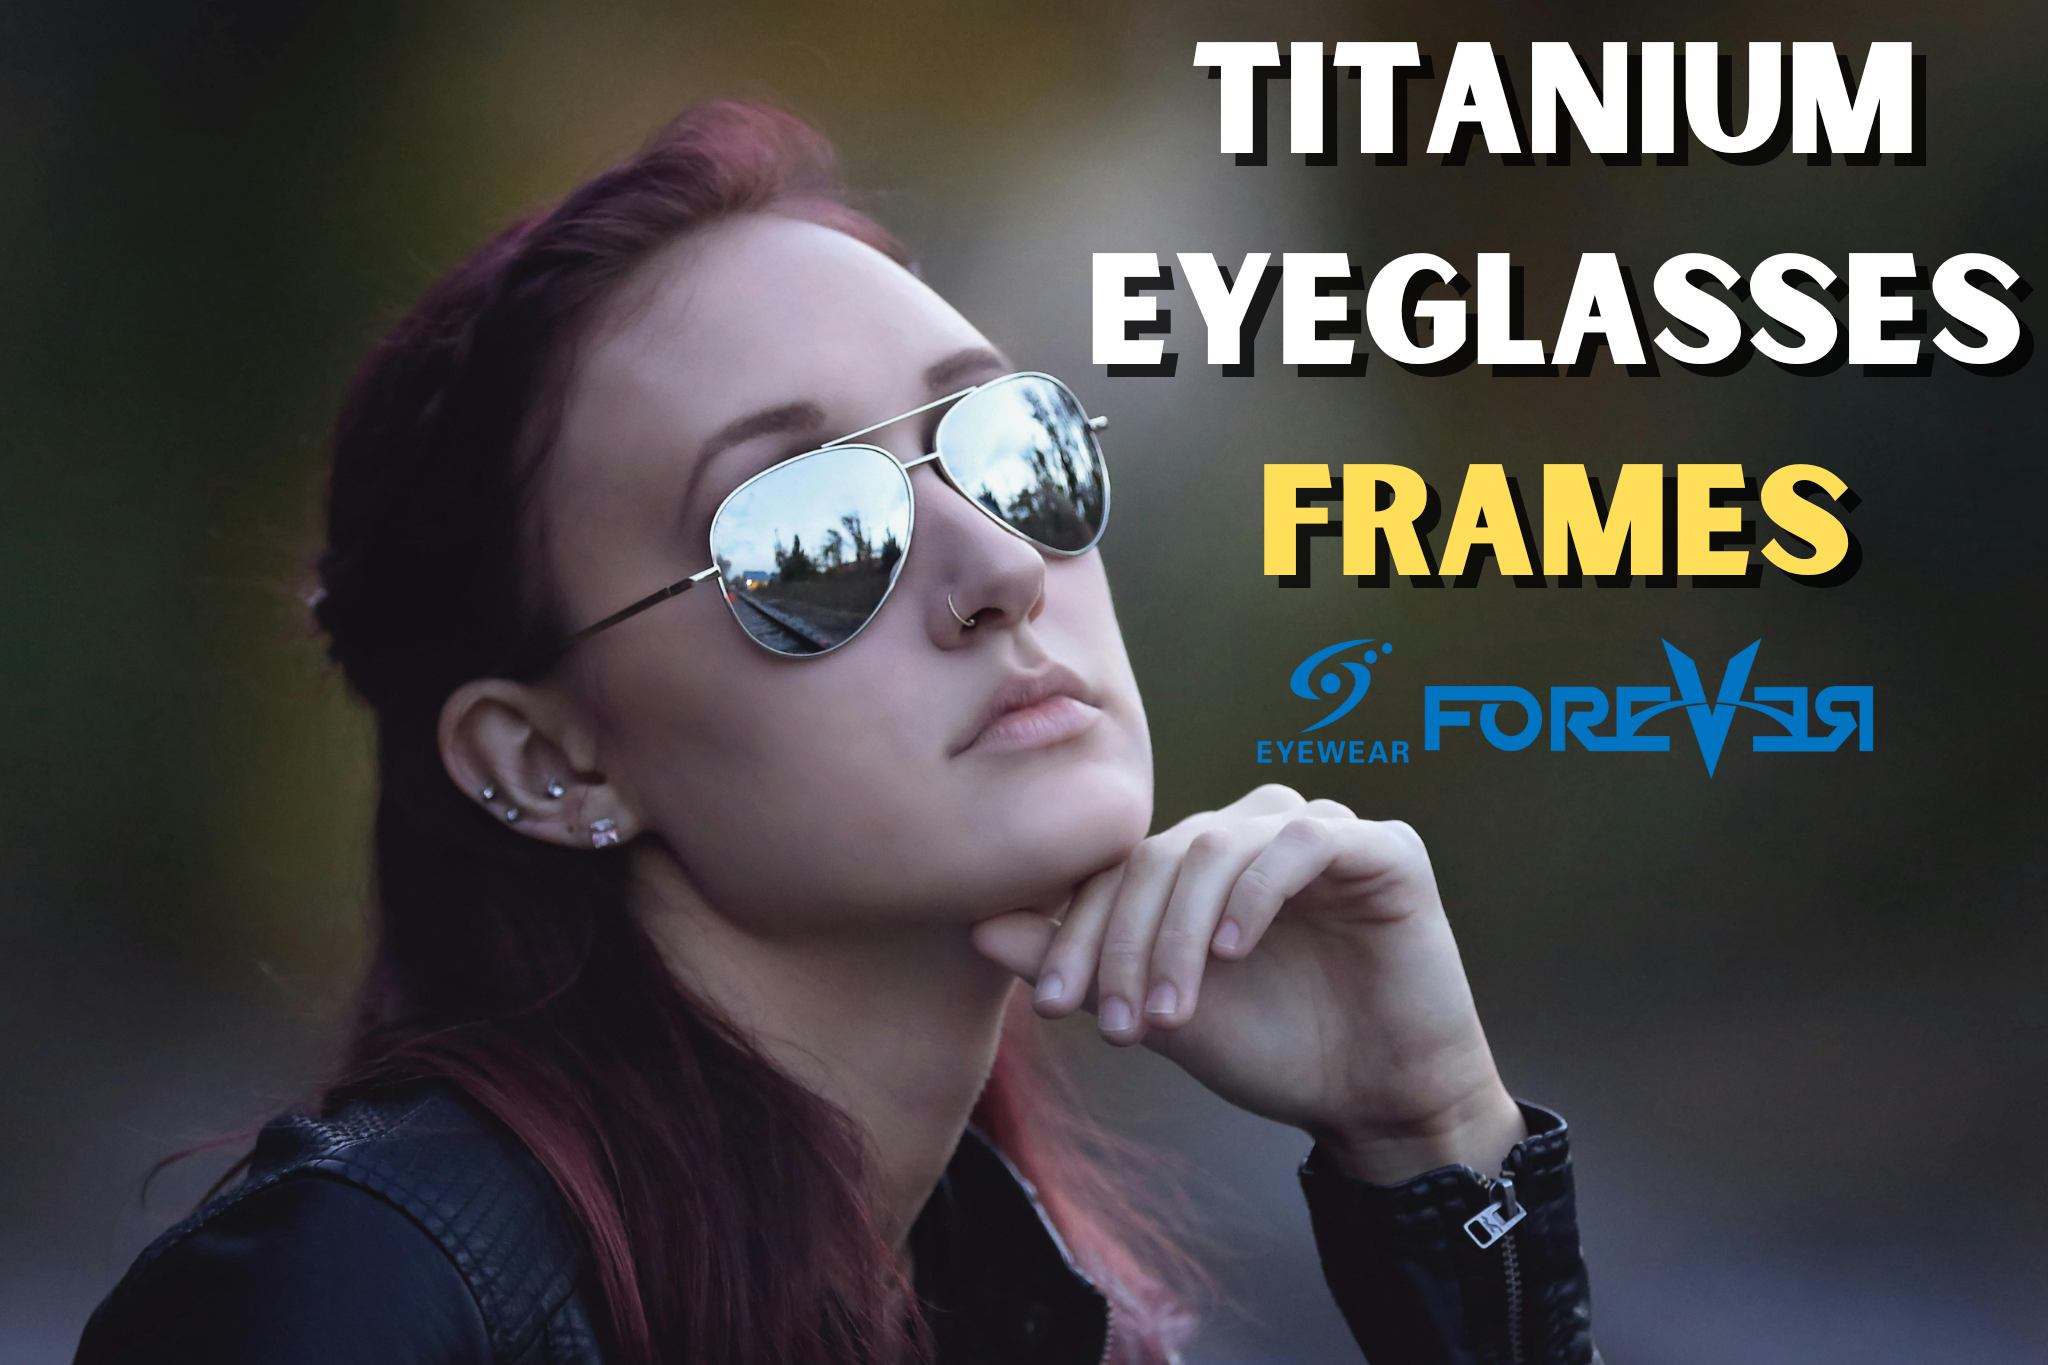 Are Titanium Eyeglasses Frames Worth it?